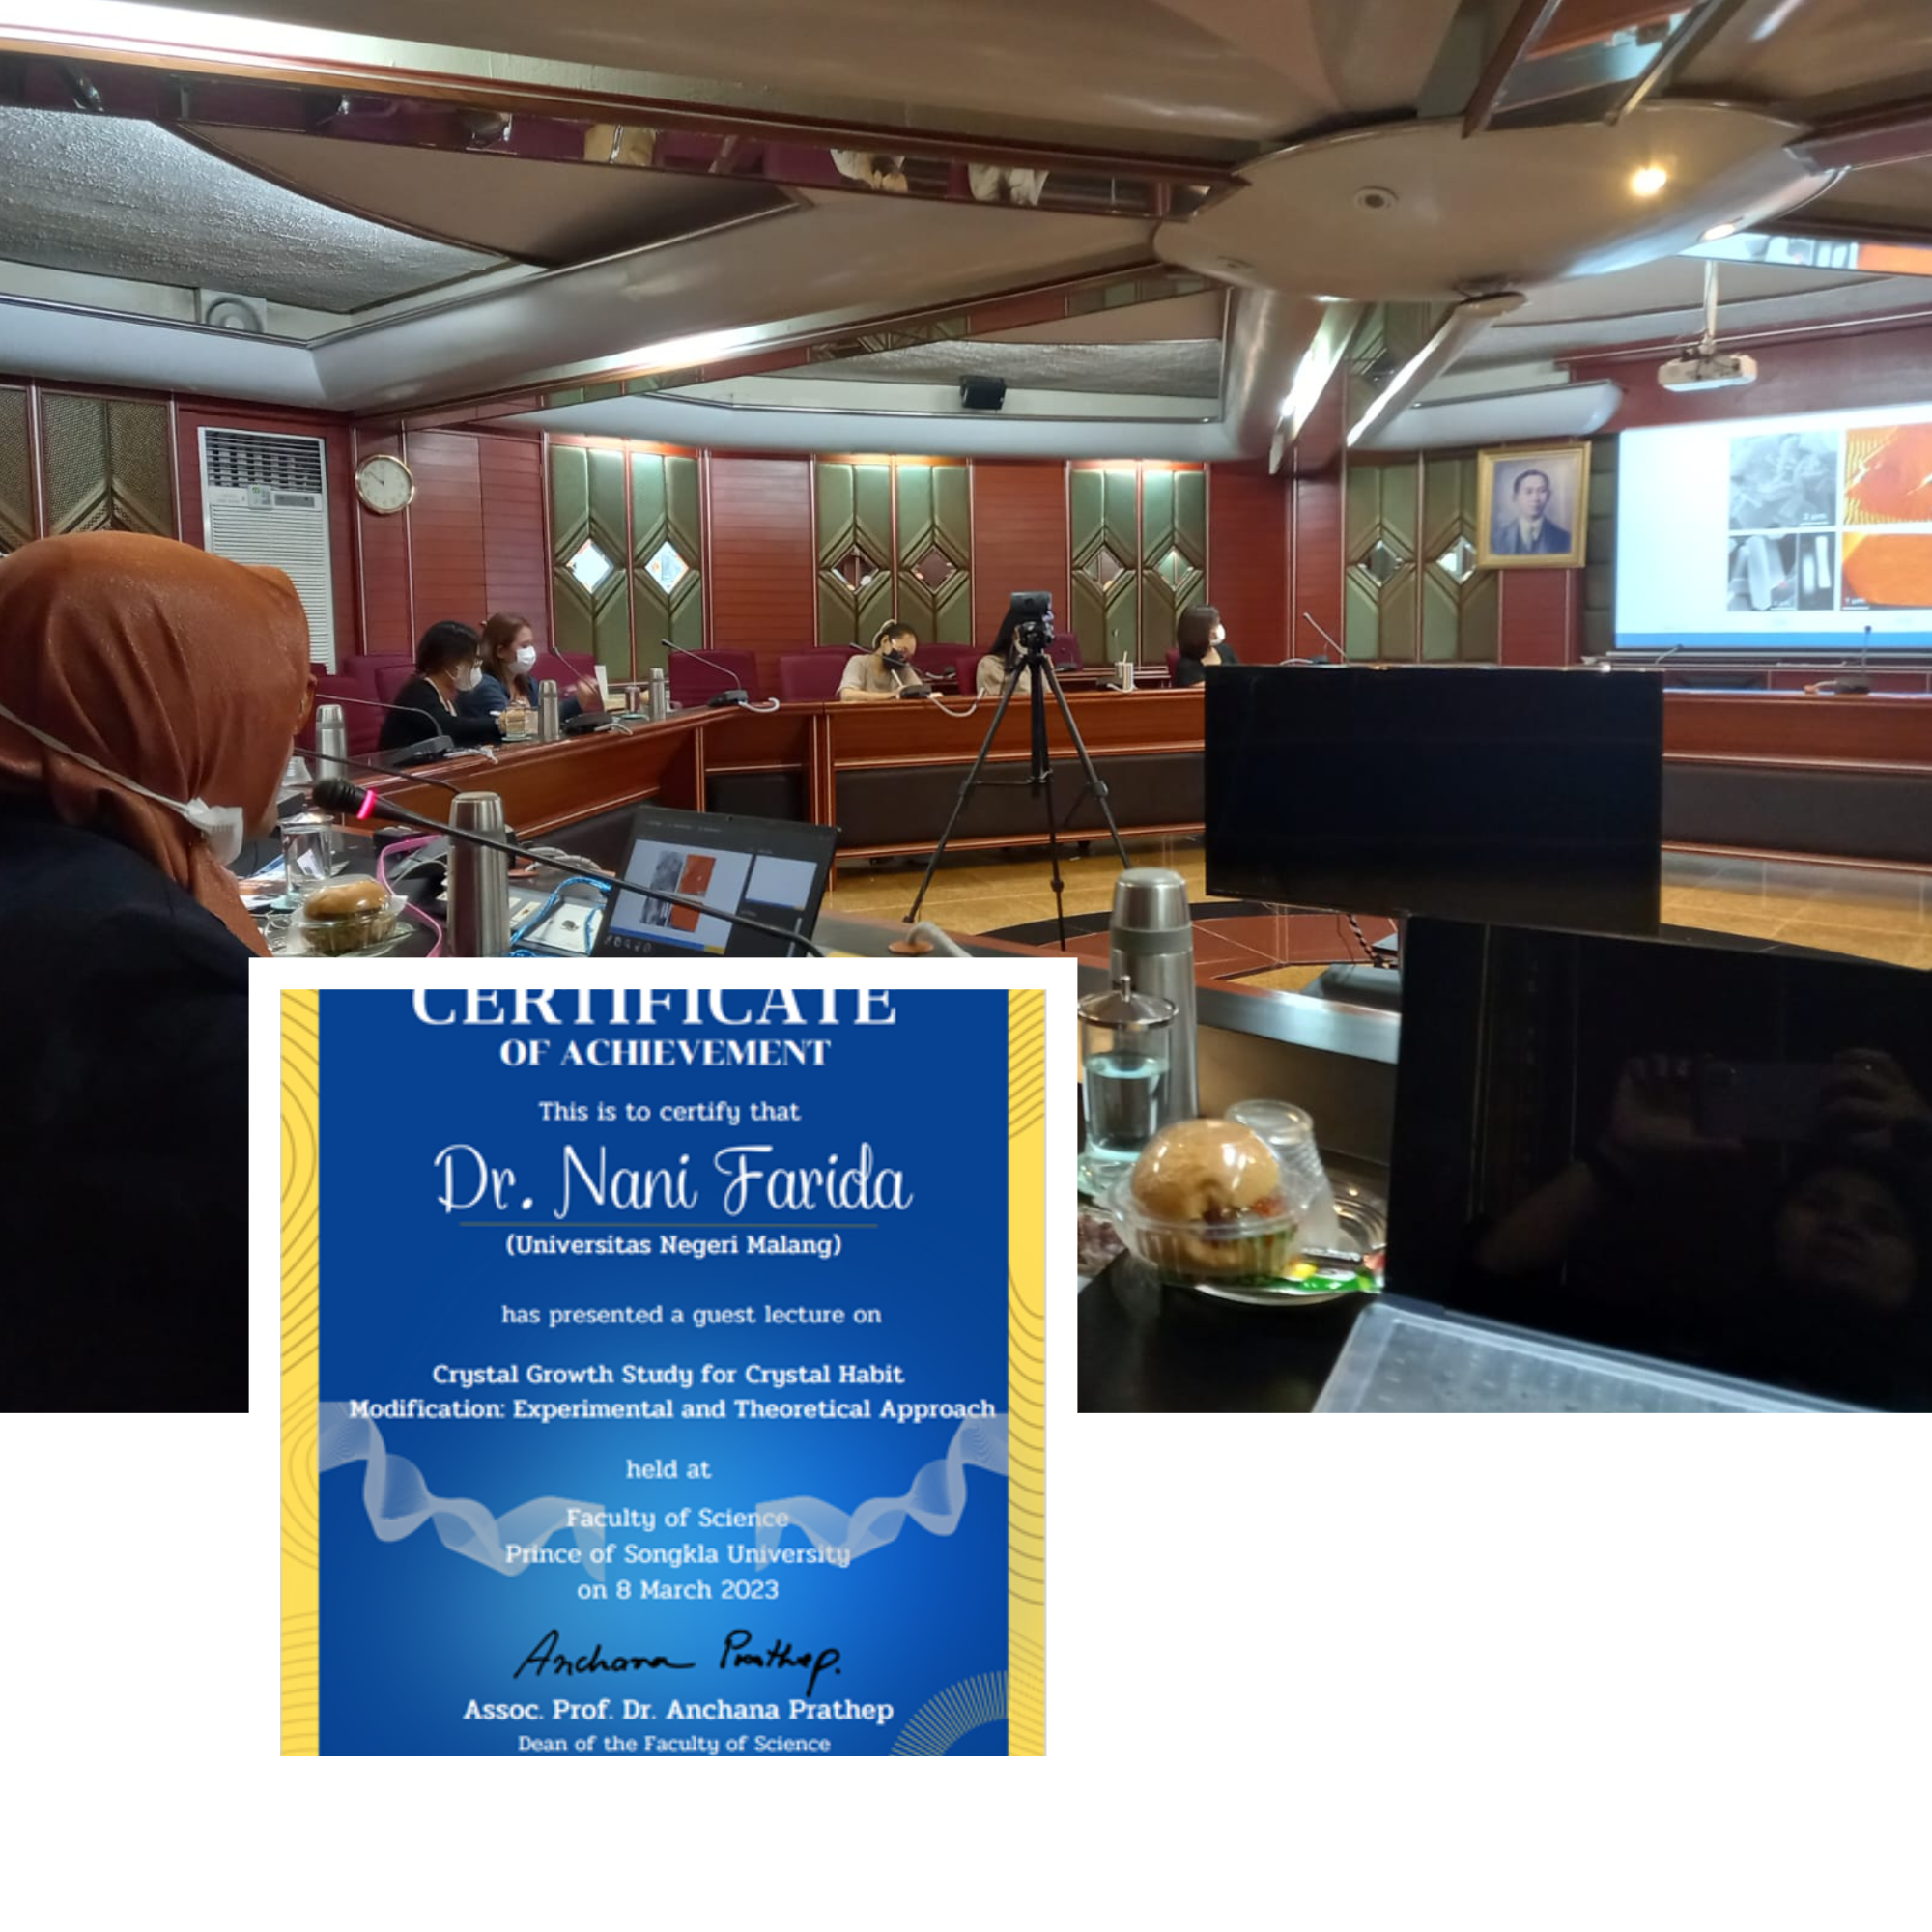 Guest lecture di Prince of Songkla University (PSU) oleh Dr. Nani Farida